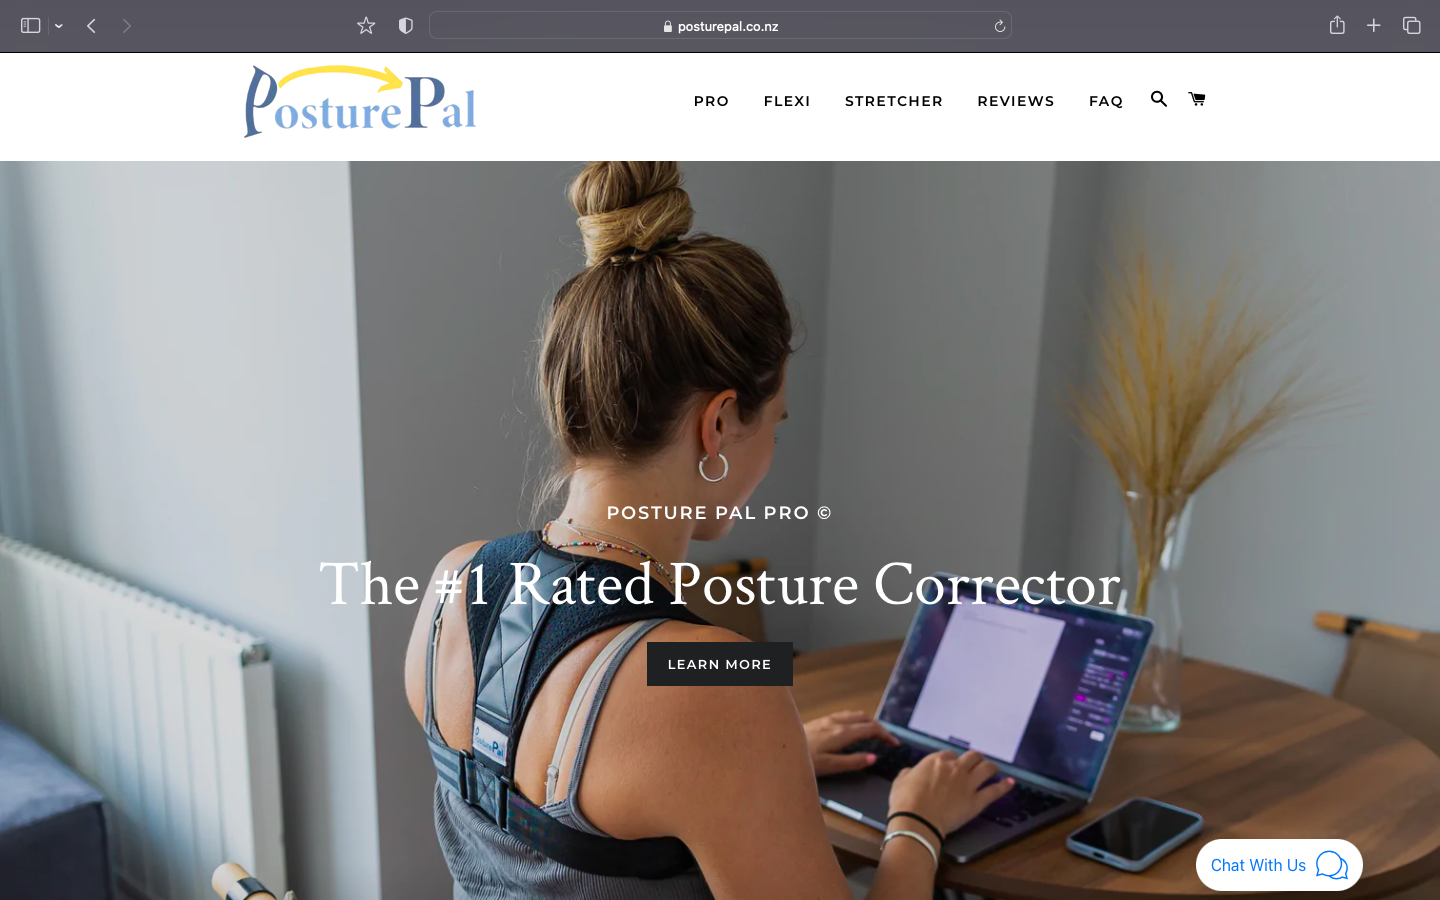 posture pal | posturenet.app list of posture app comparisons.